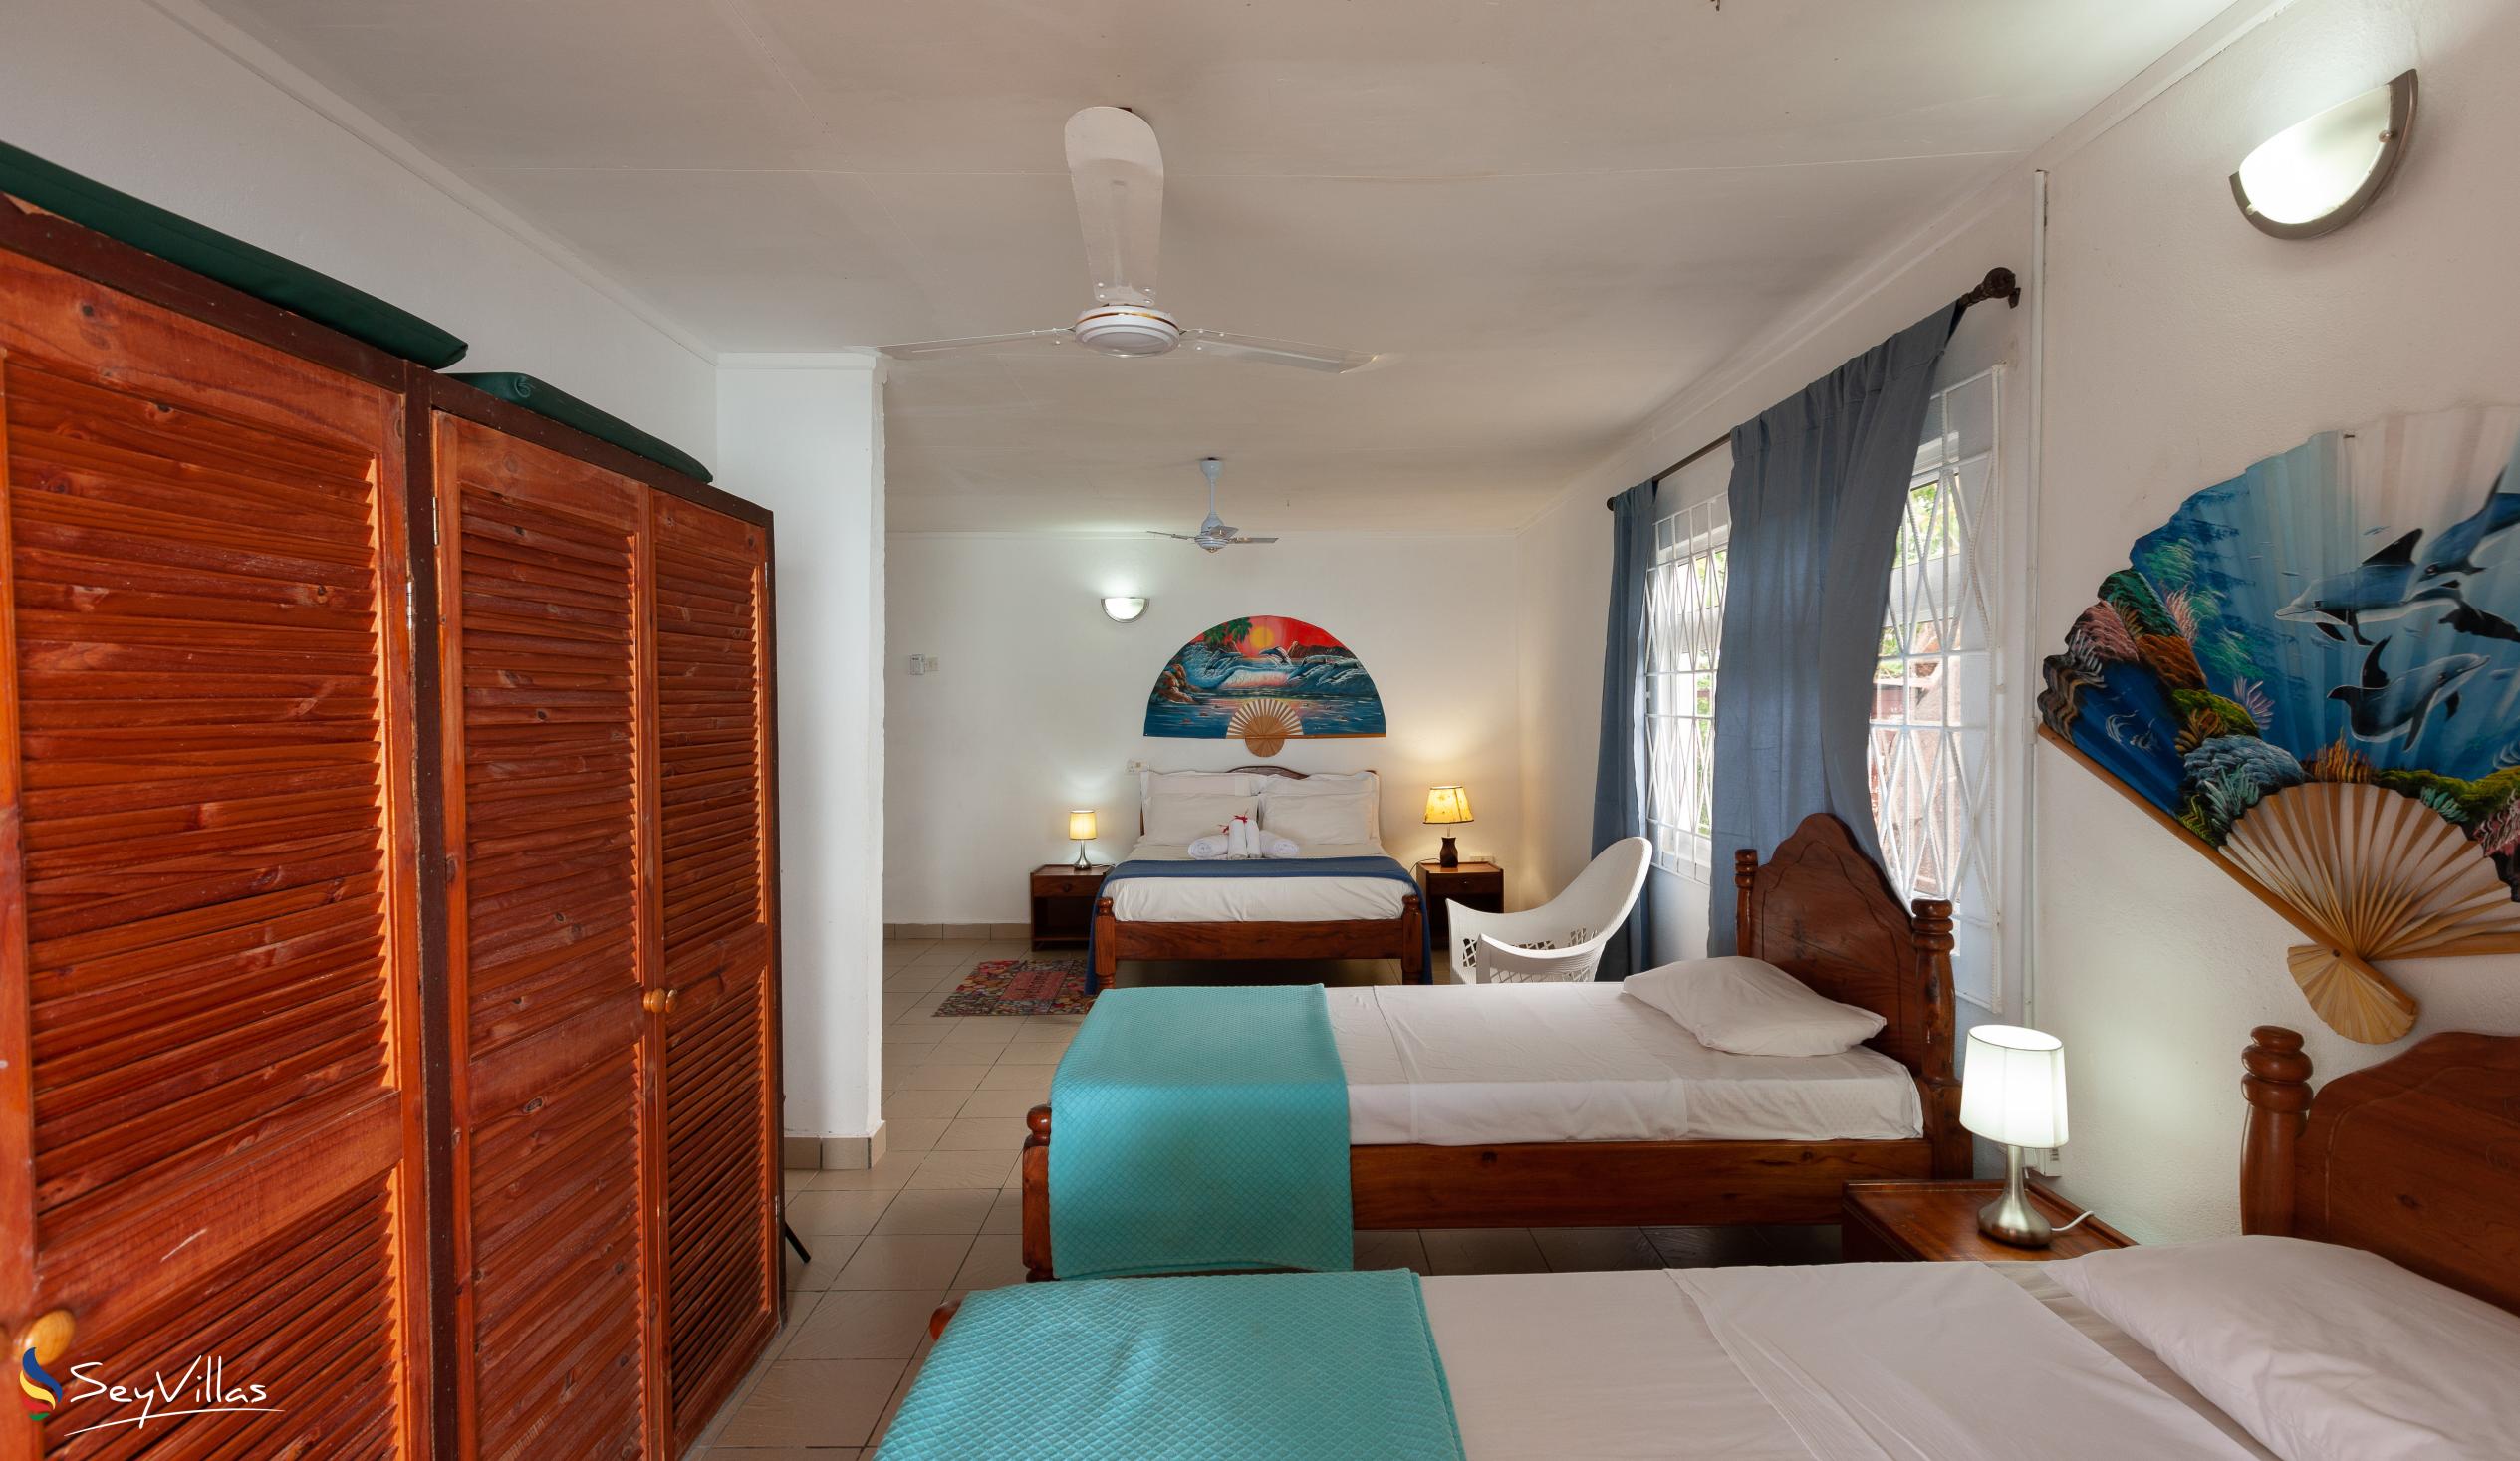 Foto 42: Maison du Soleil - Villa 2 chambres - Praslin (Seychelles)